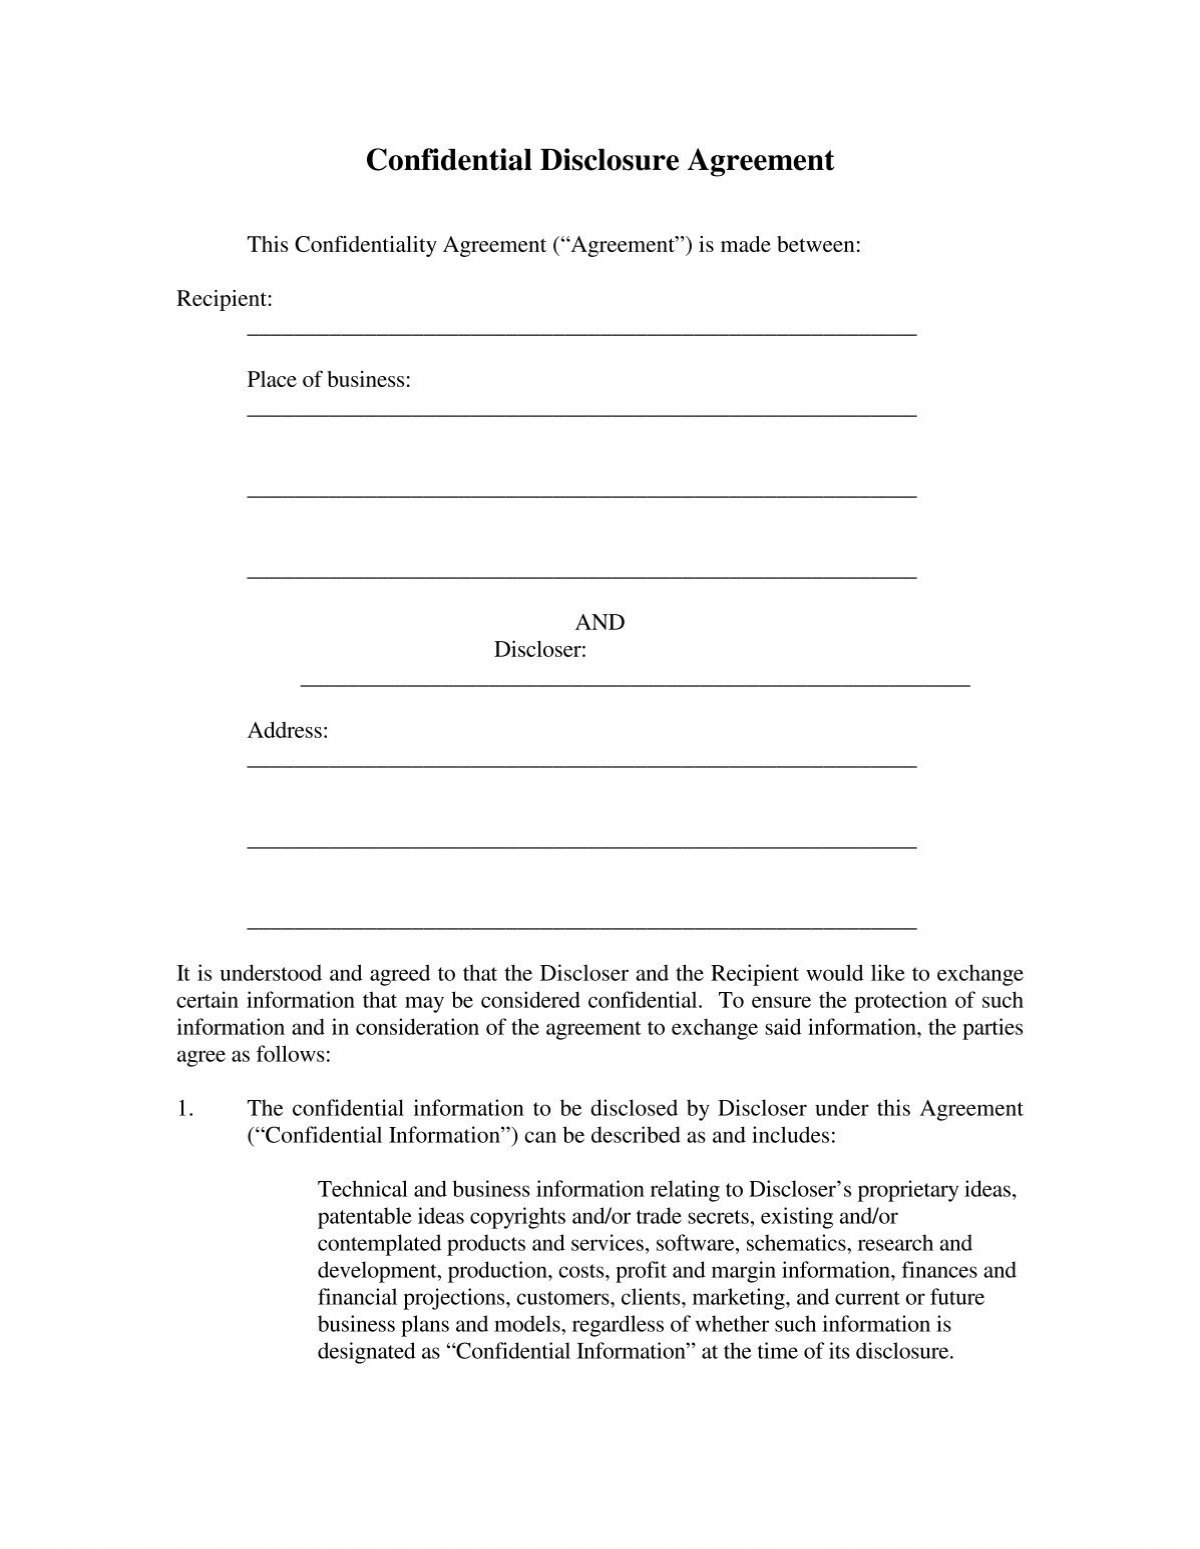 confidential-disclosure-agreement